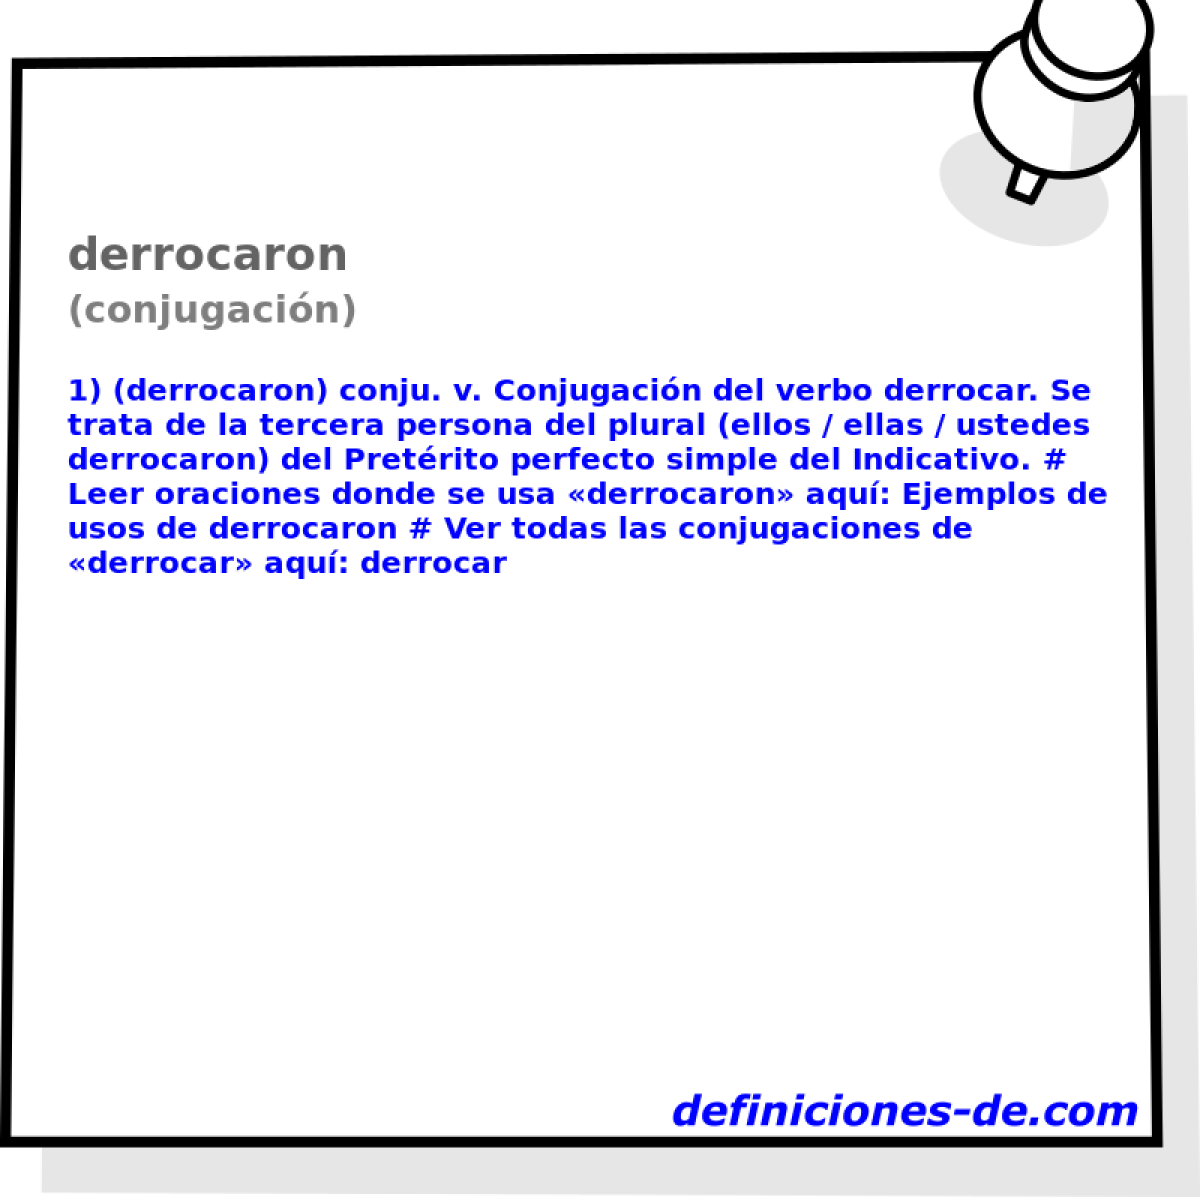 derrocaron (conjugacin)